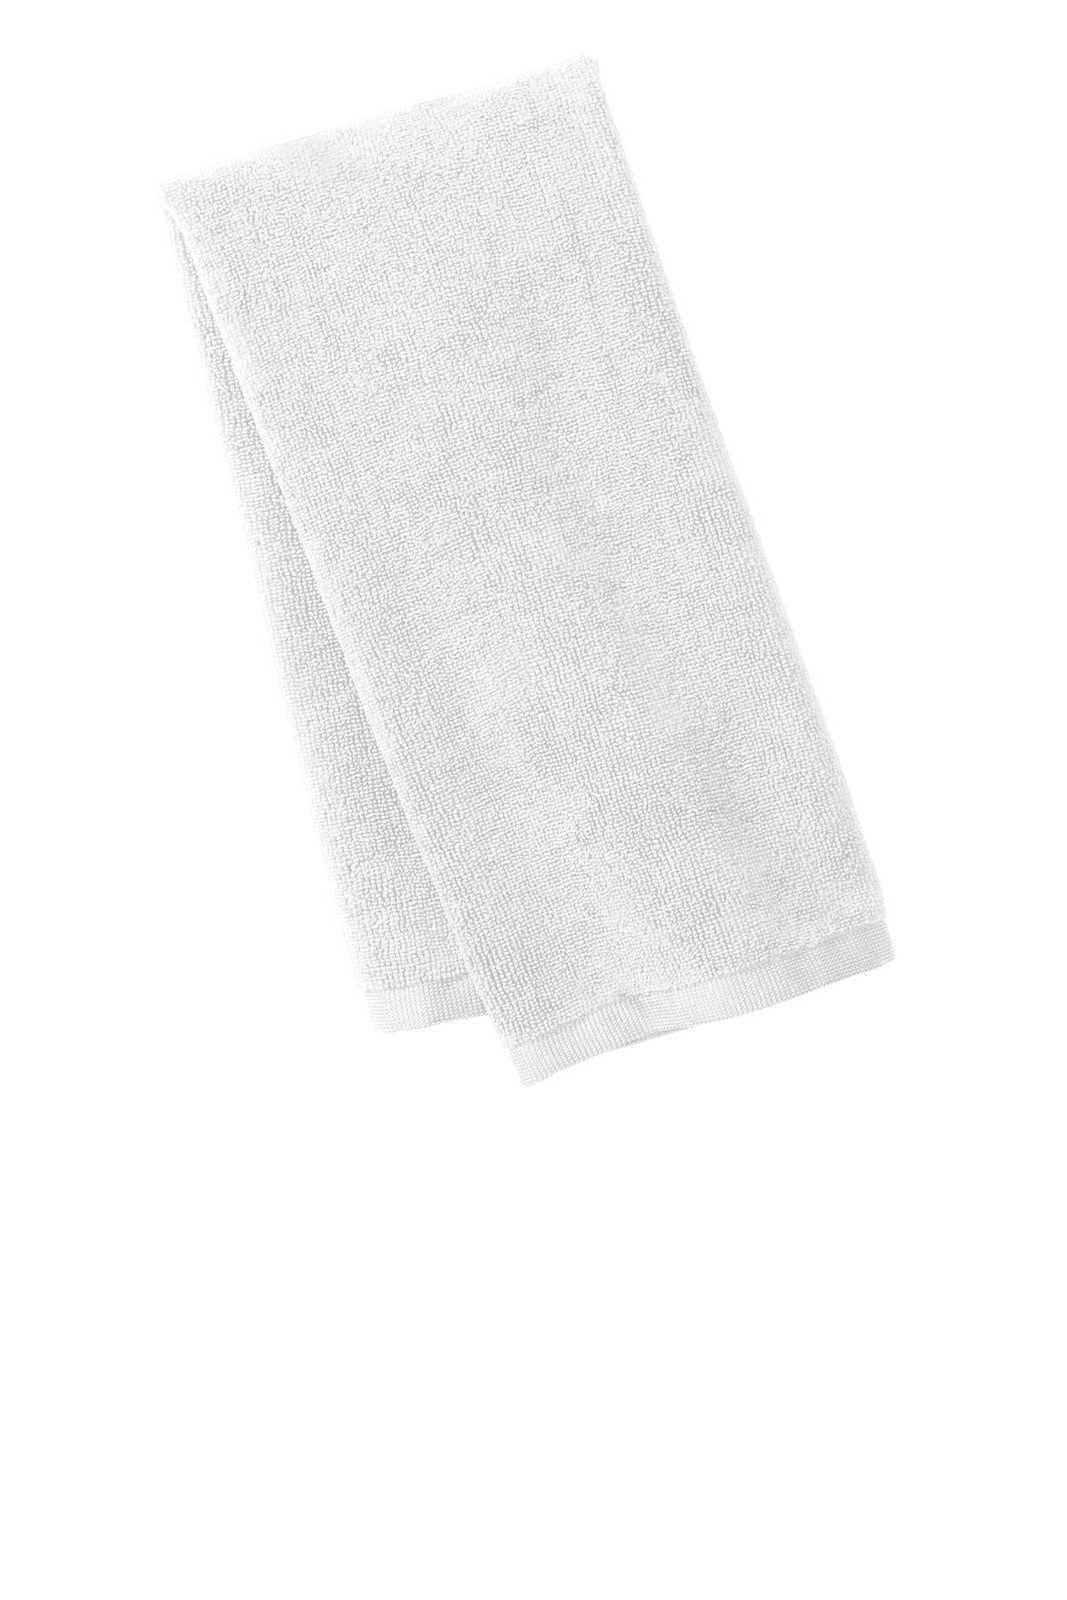 Port Authority TW540 Microfiber Golf Towel - White - HIT a Double - 1